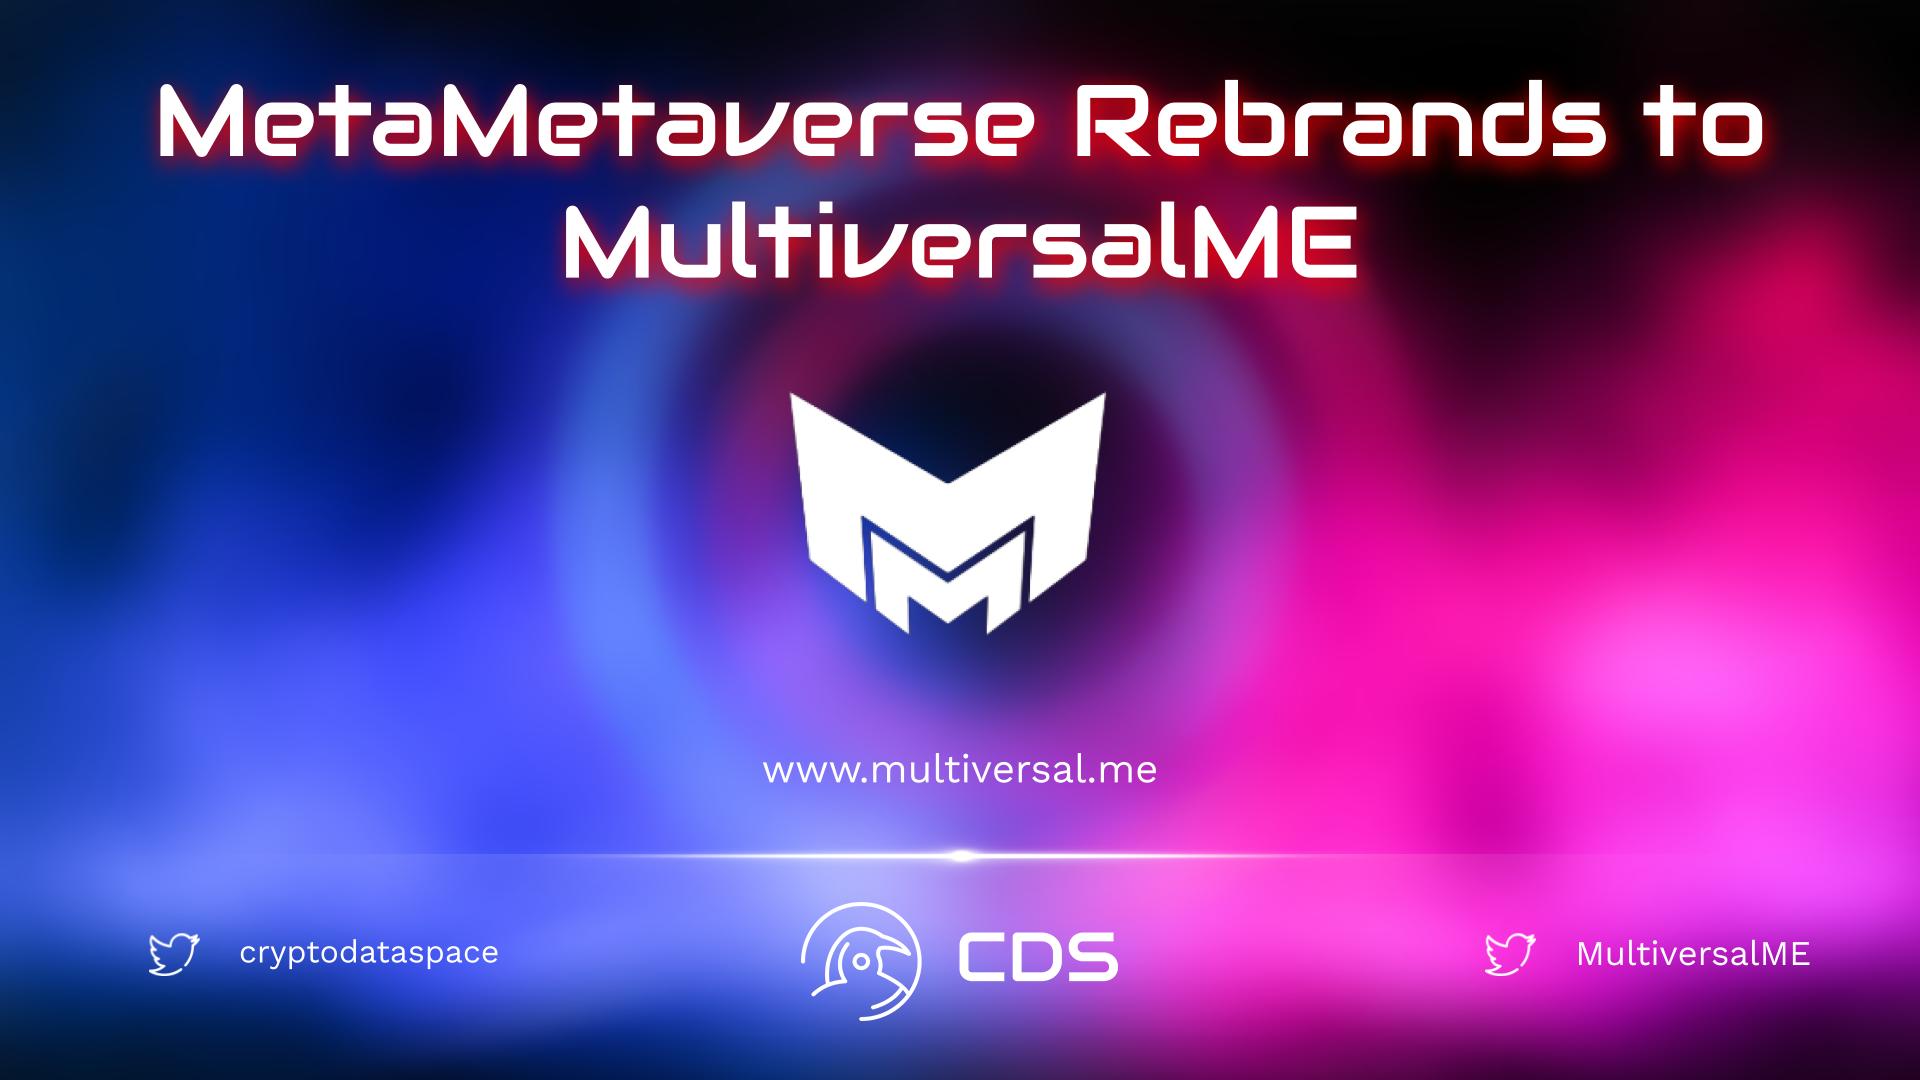 MetaMetaverse Rebrands to MultiversalME